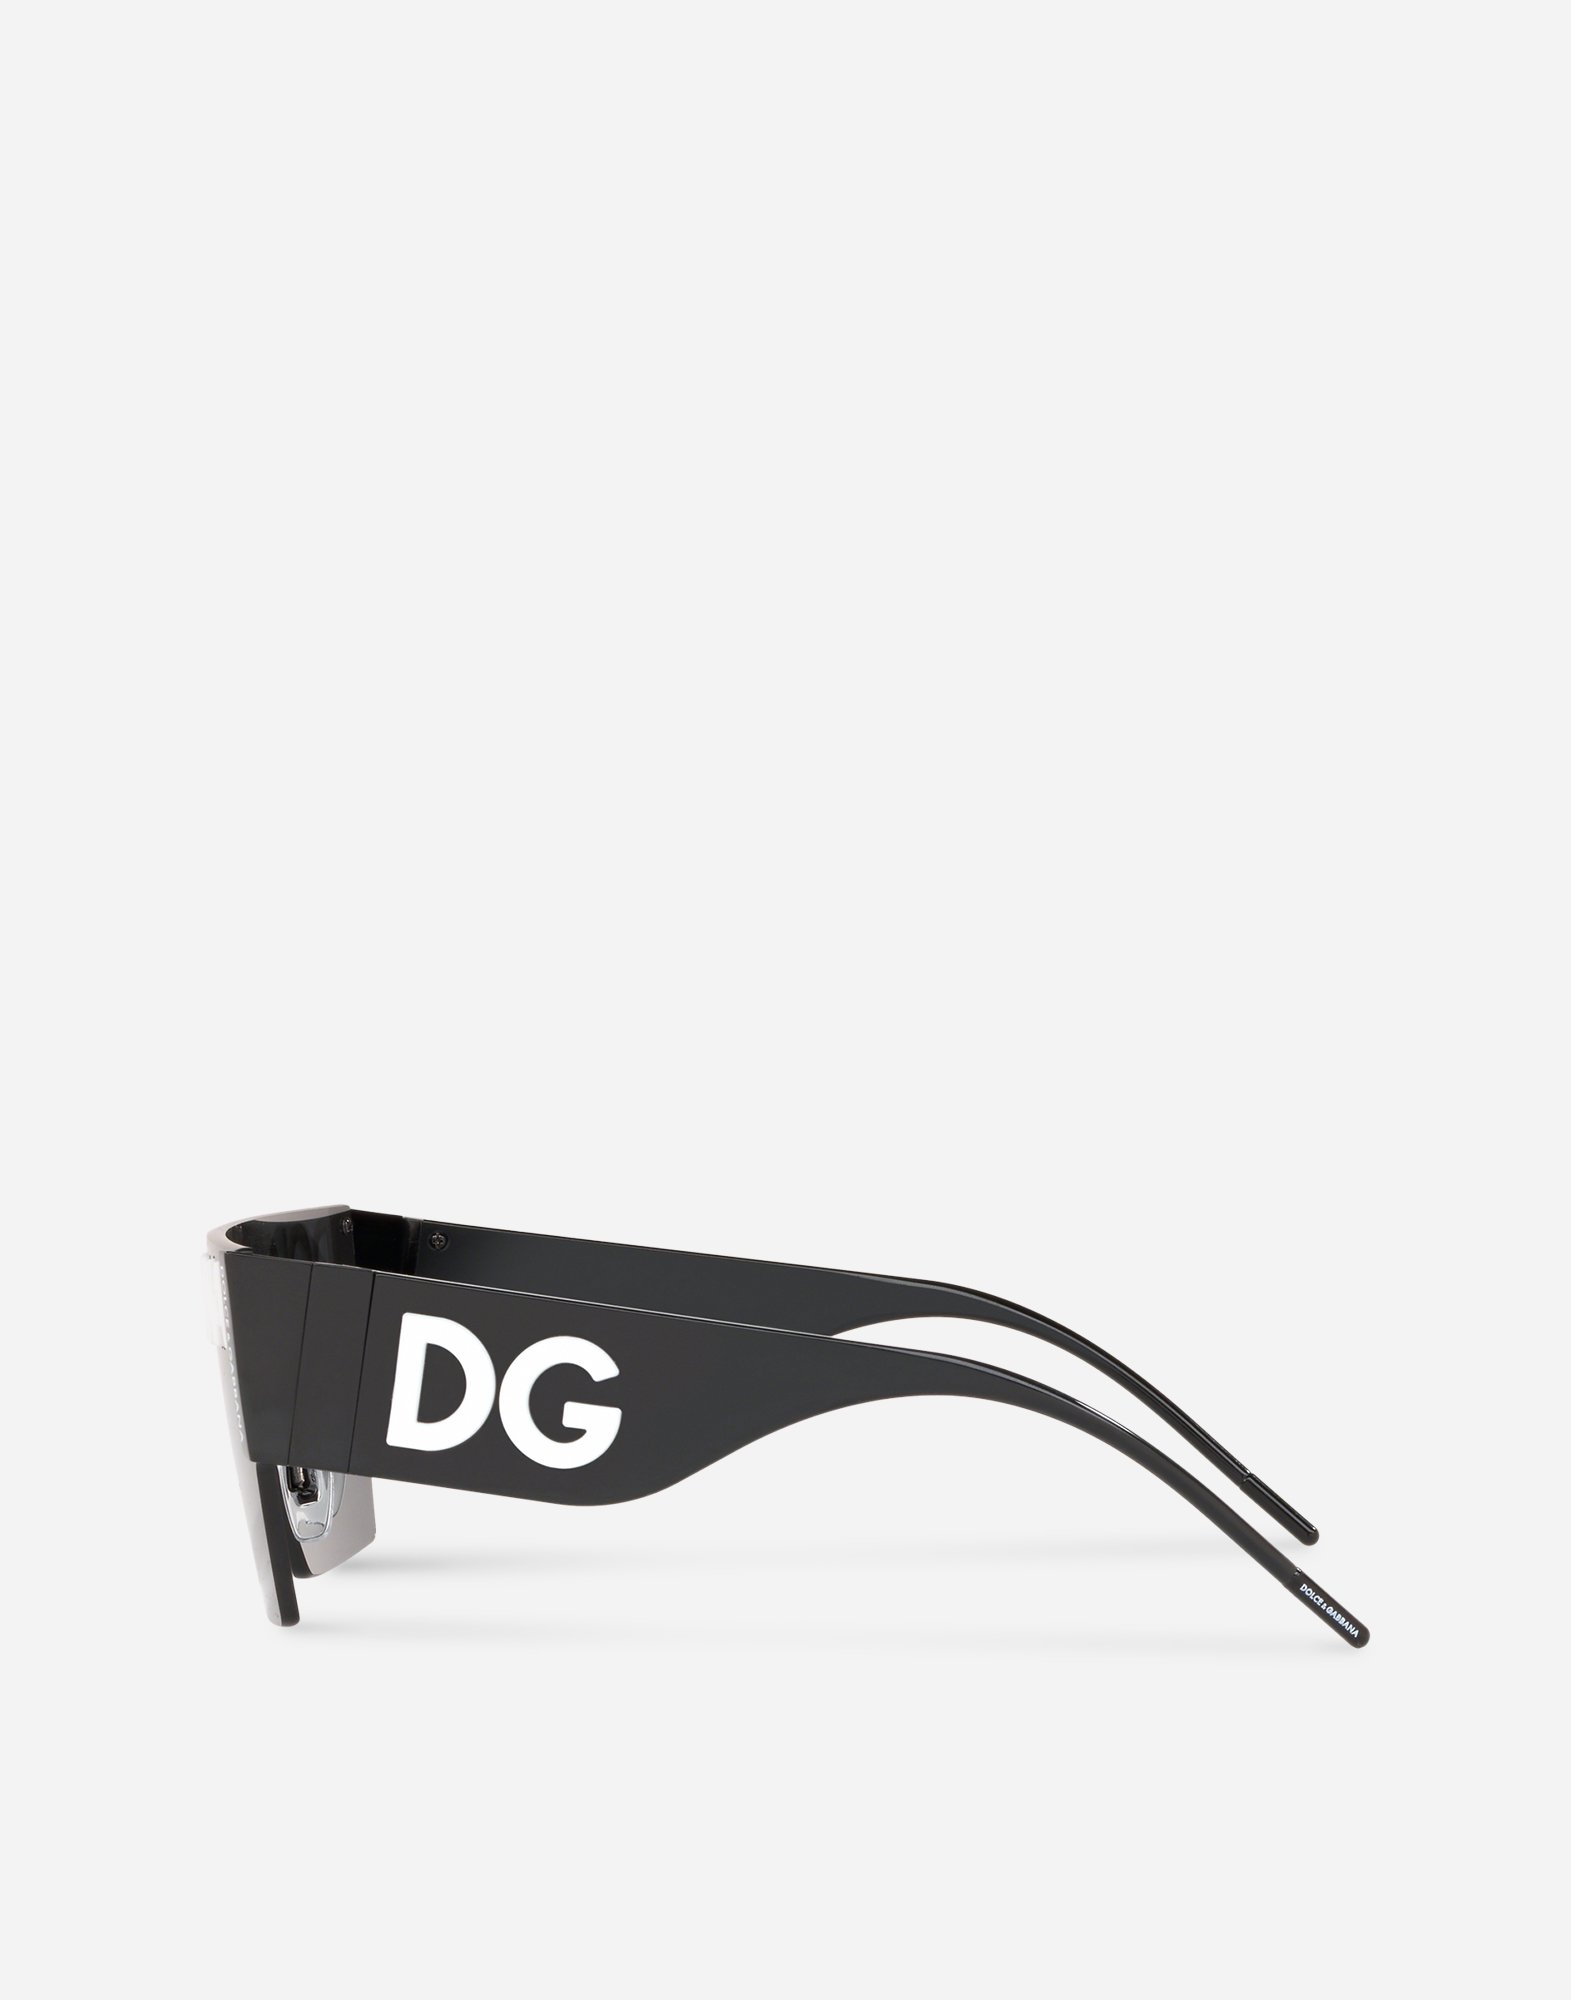 dolce gabbana dg logo sunglasses